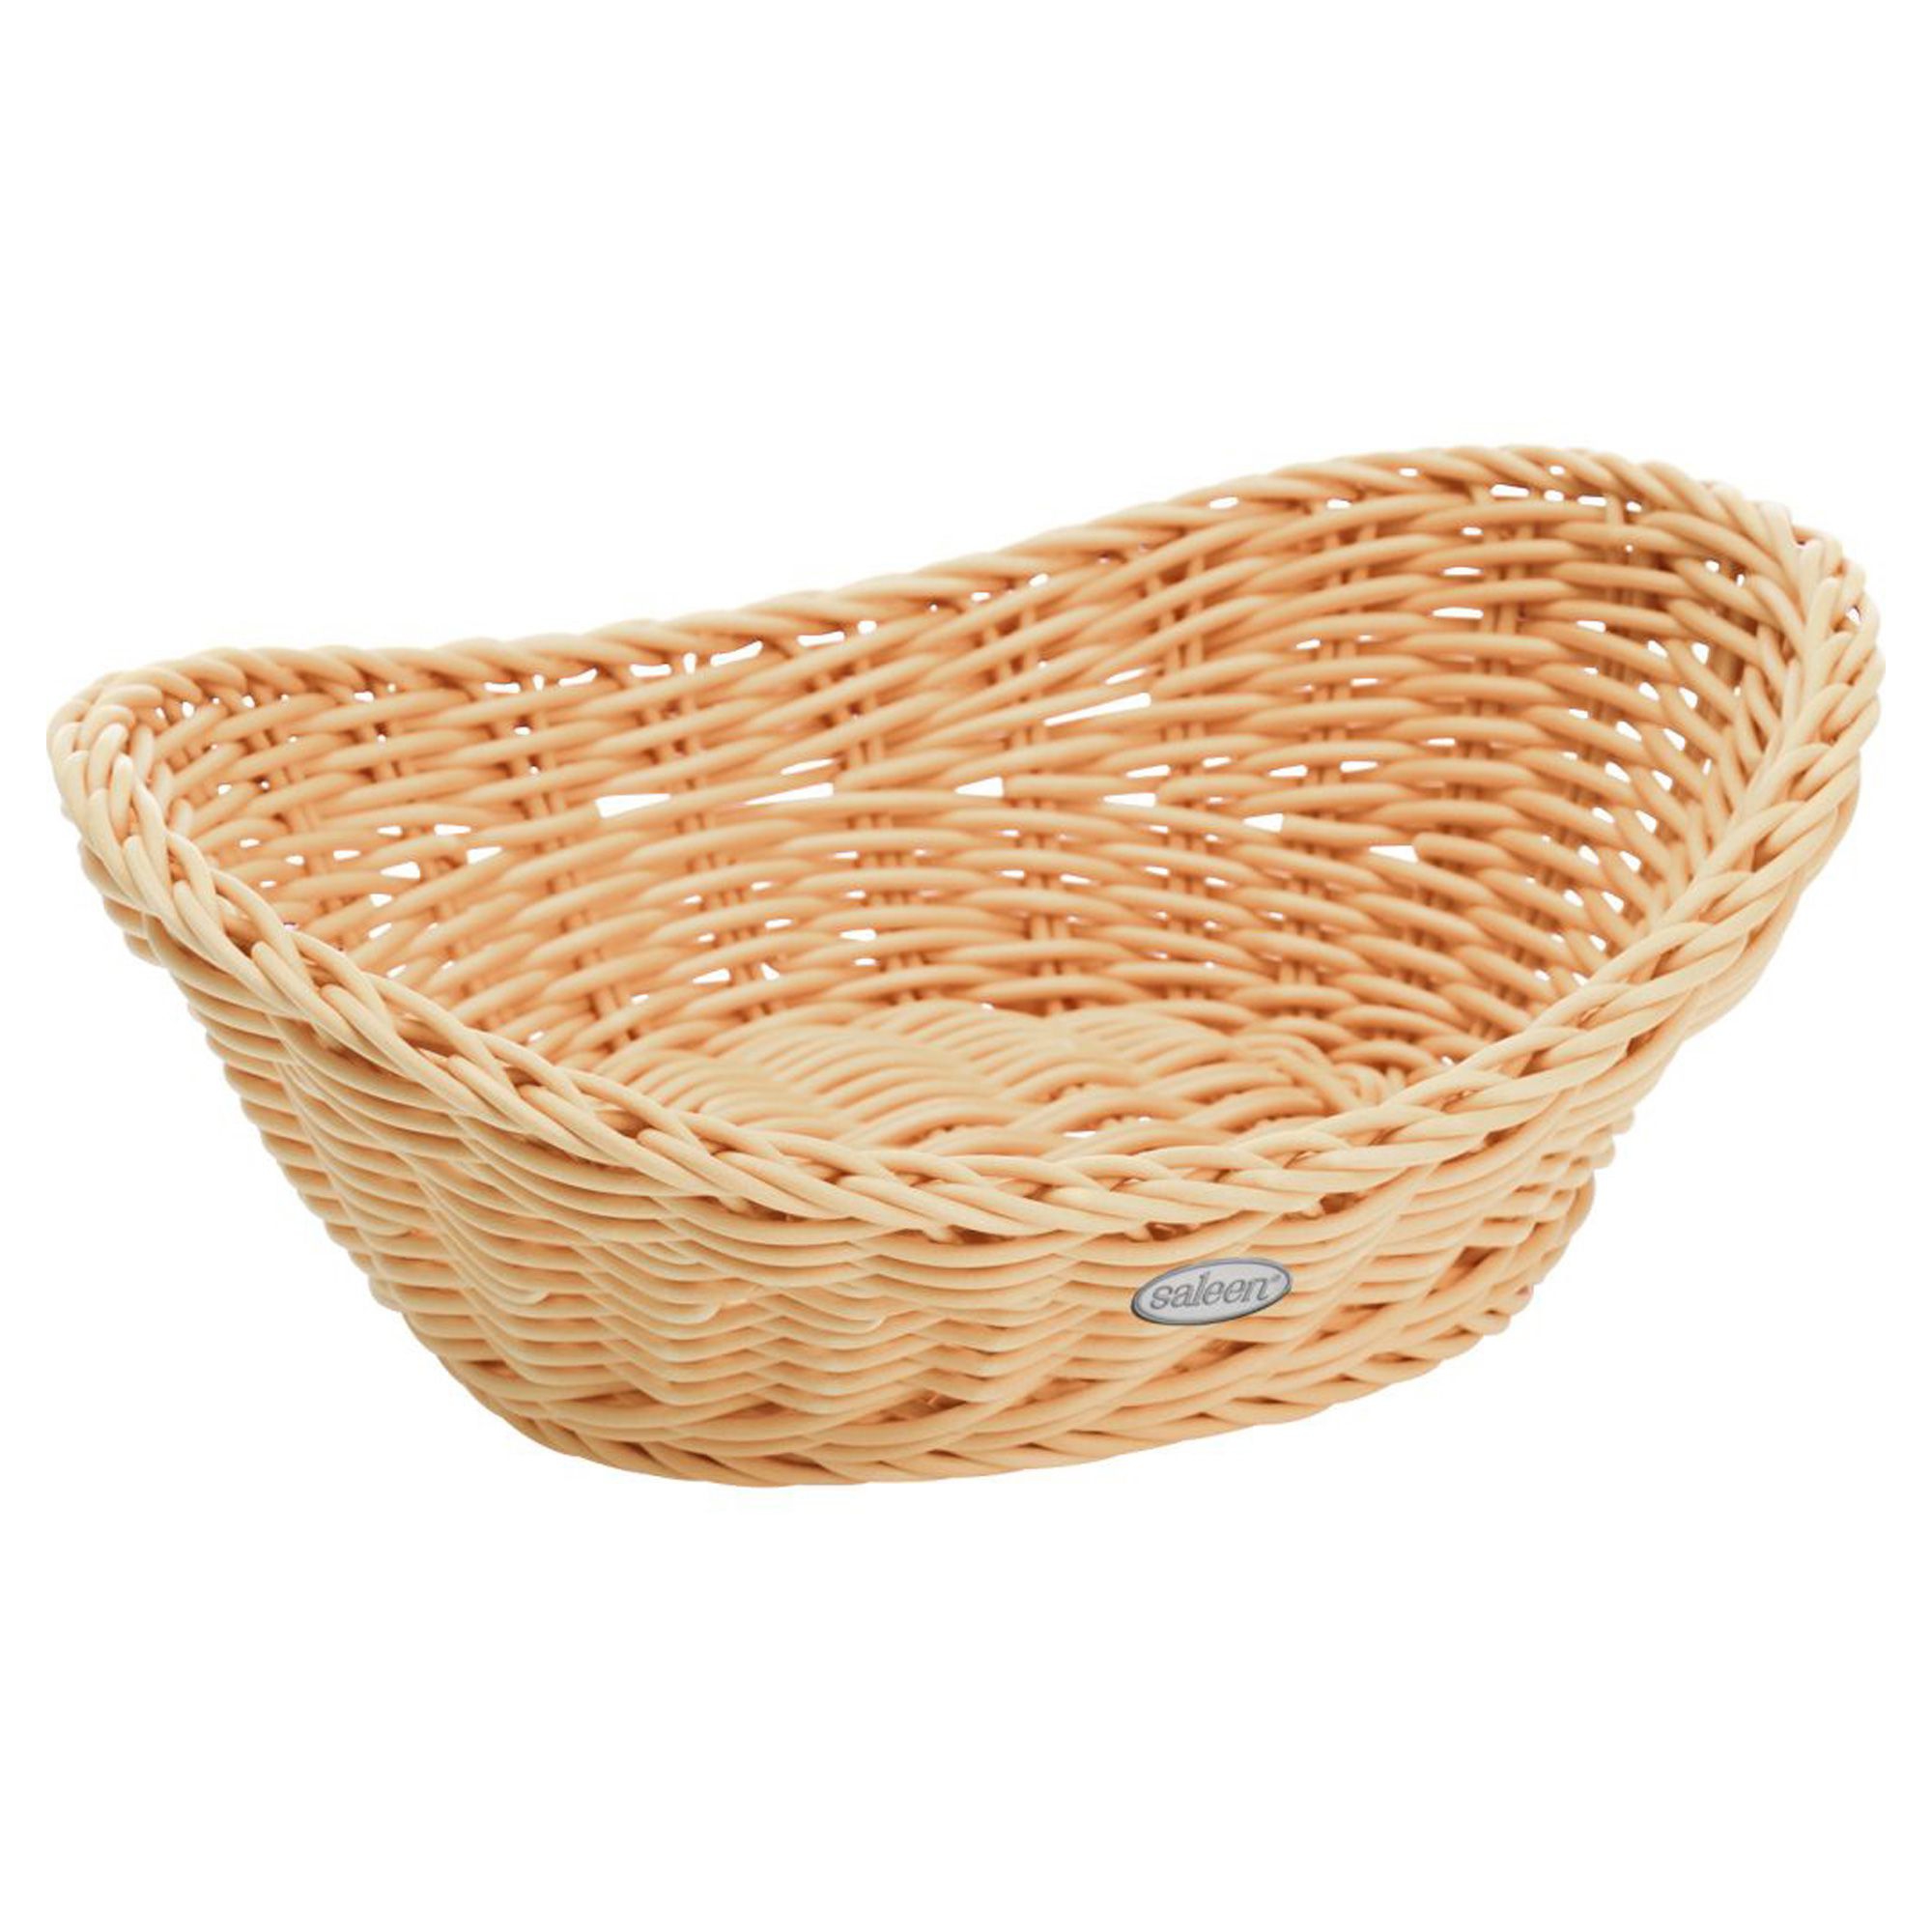 Westmark - "Coolorista" oval basket, 23.5 x 18 x 6/8 cm, light beige